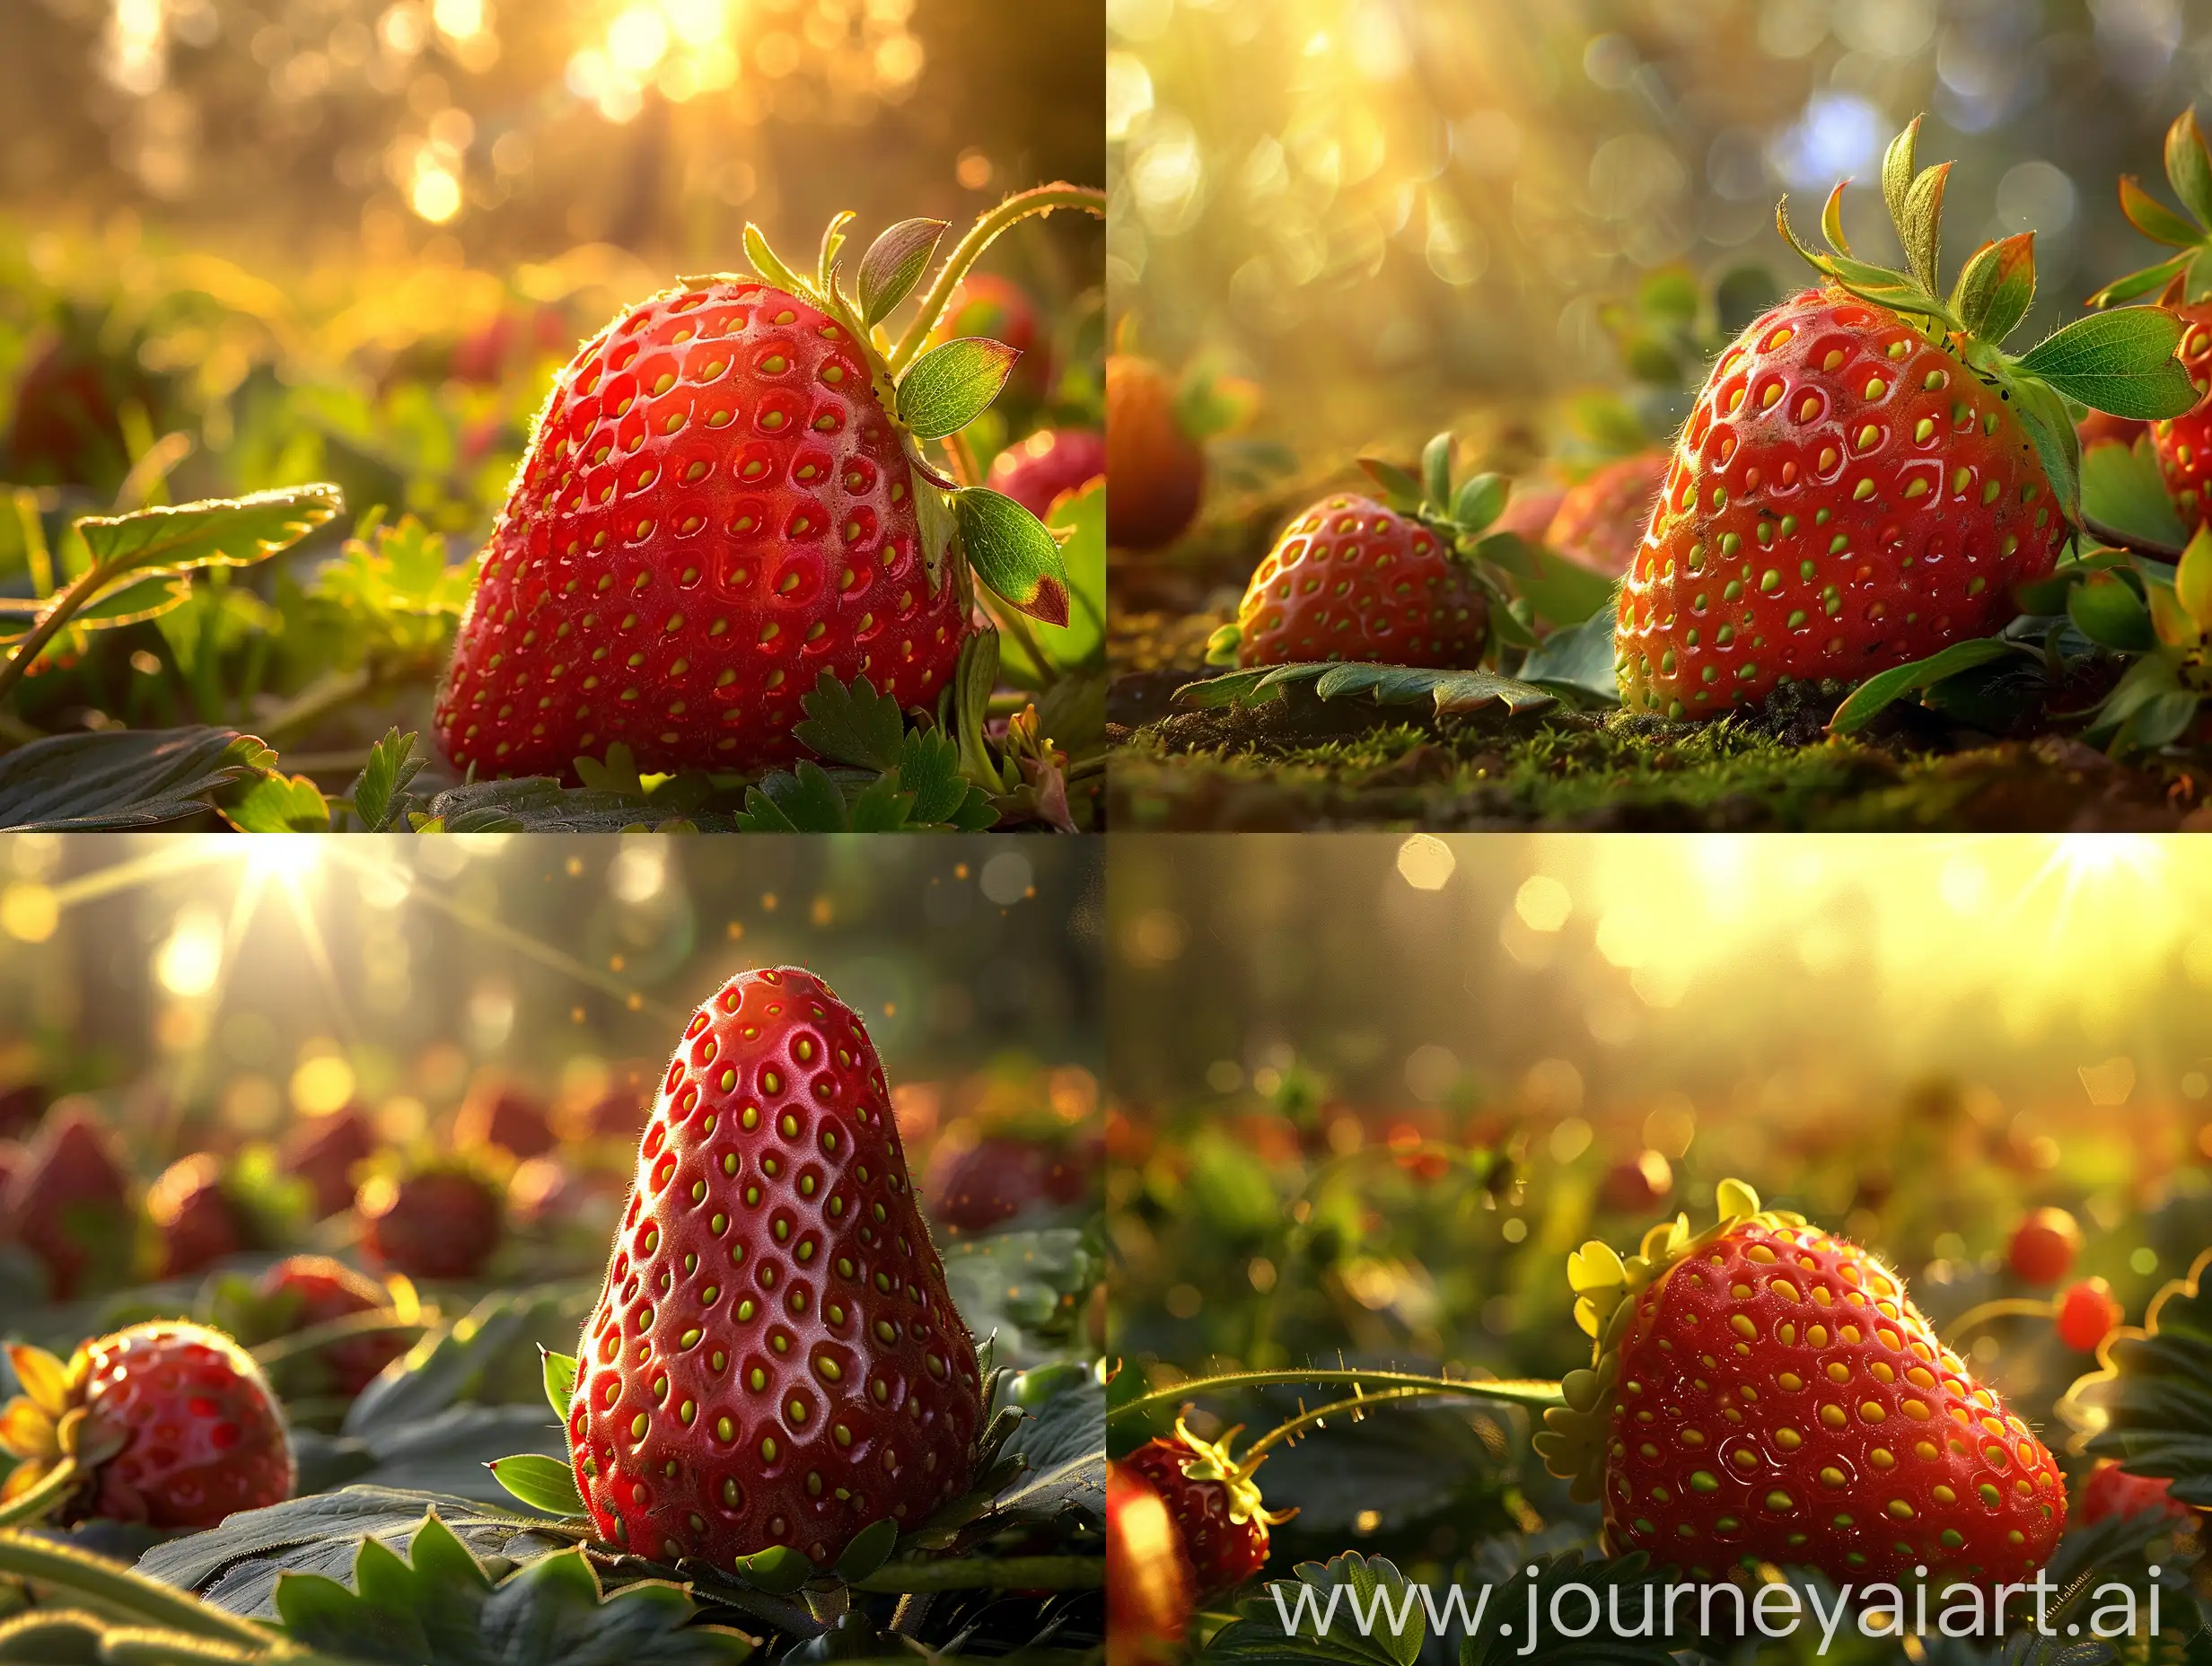 Eversweet-Strawberry-in-Golden-Sunlight